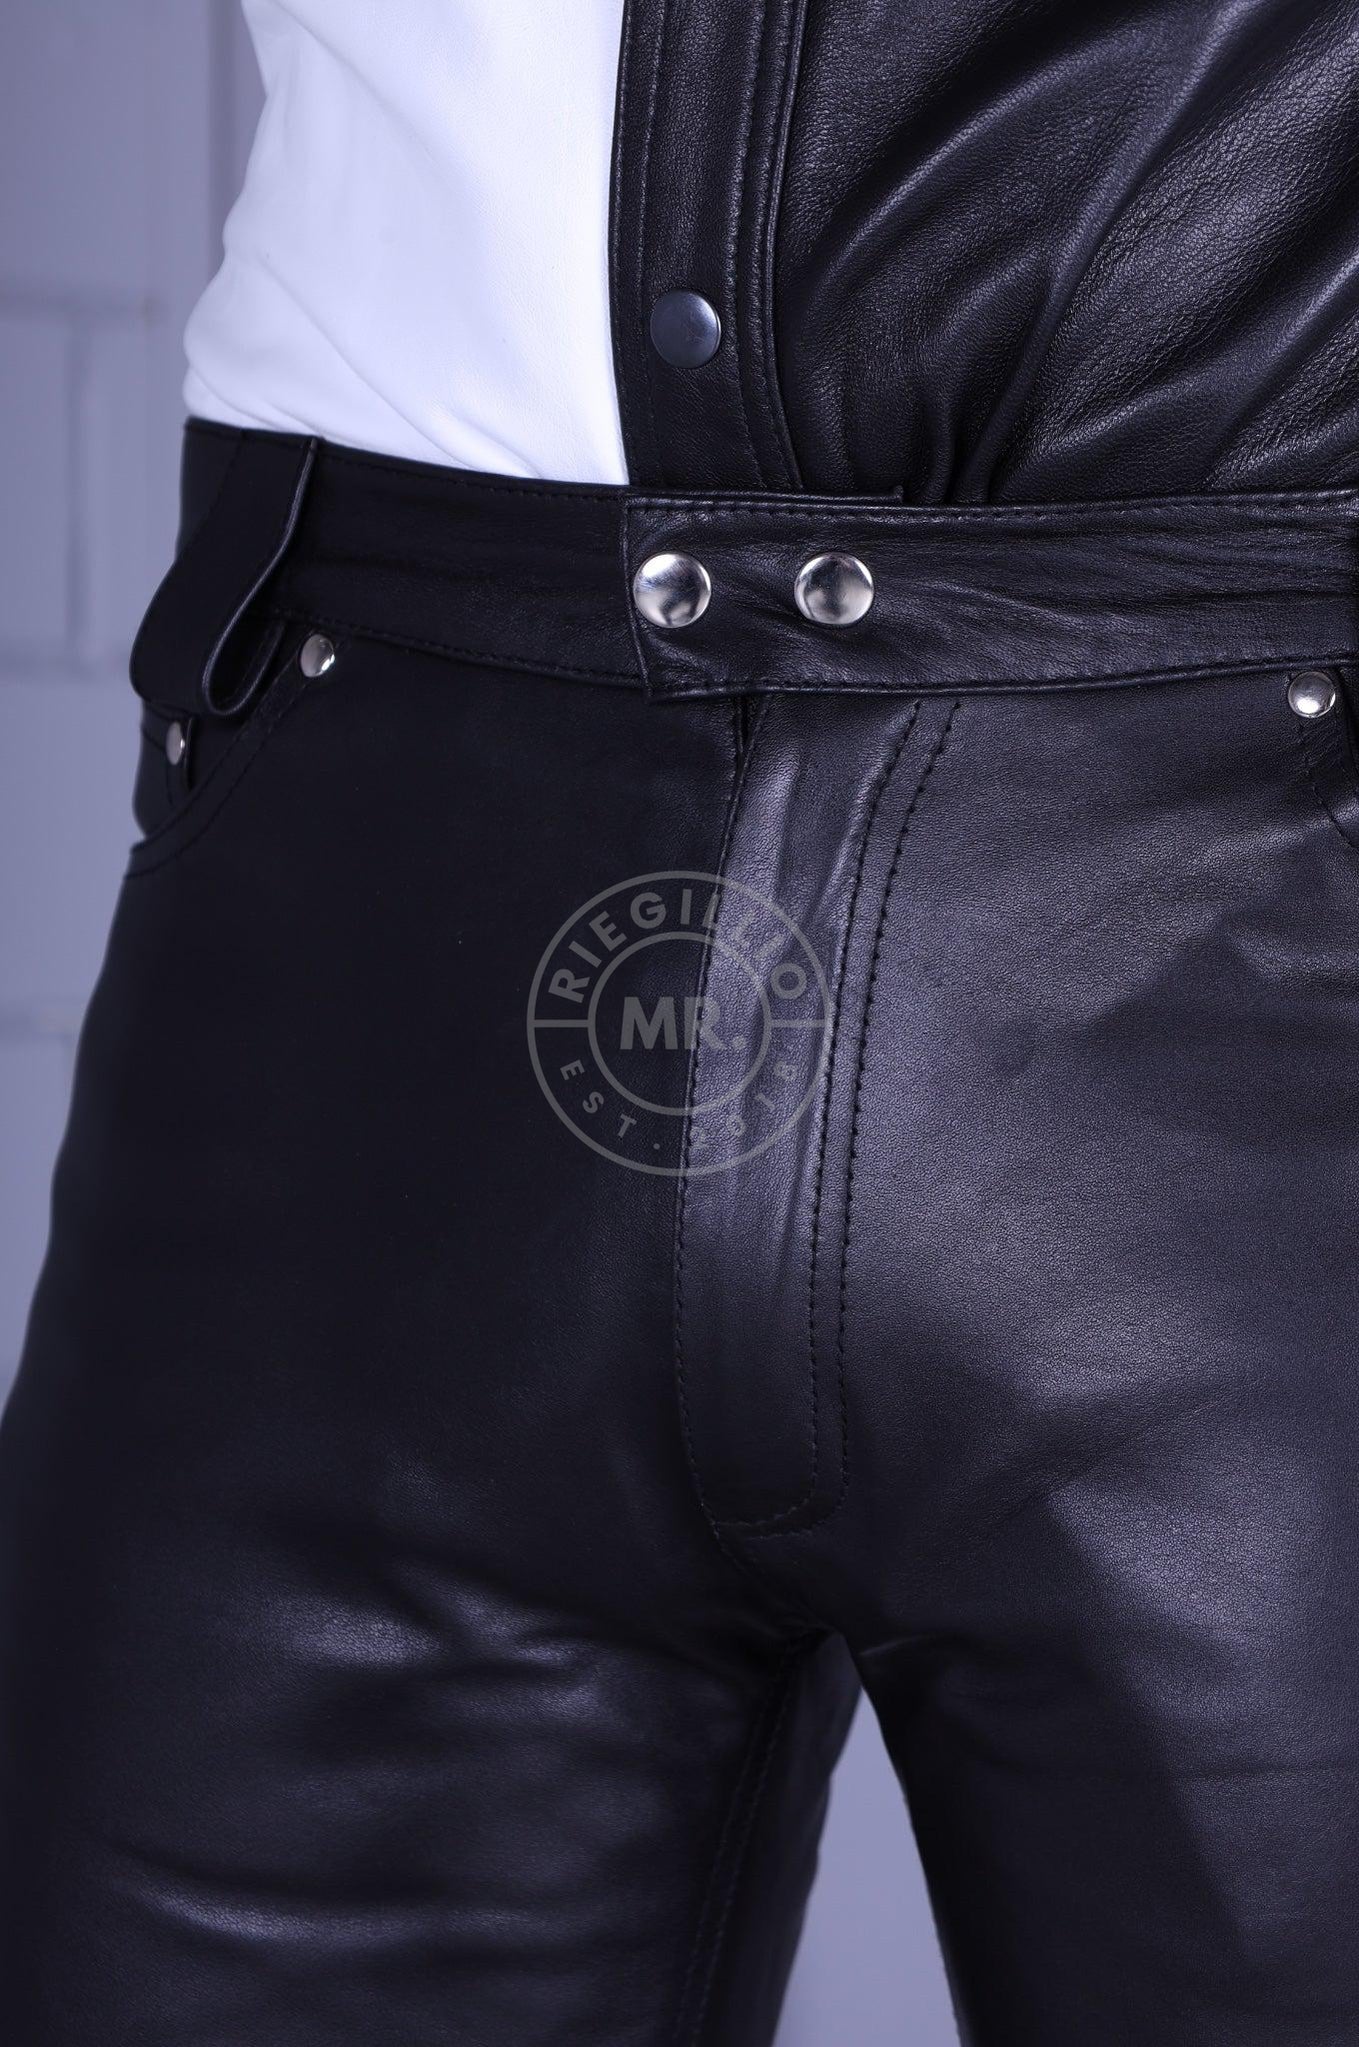 Black Leather Pants at MR. Riegillio